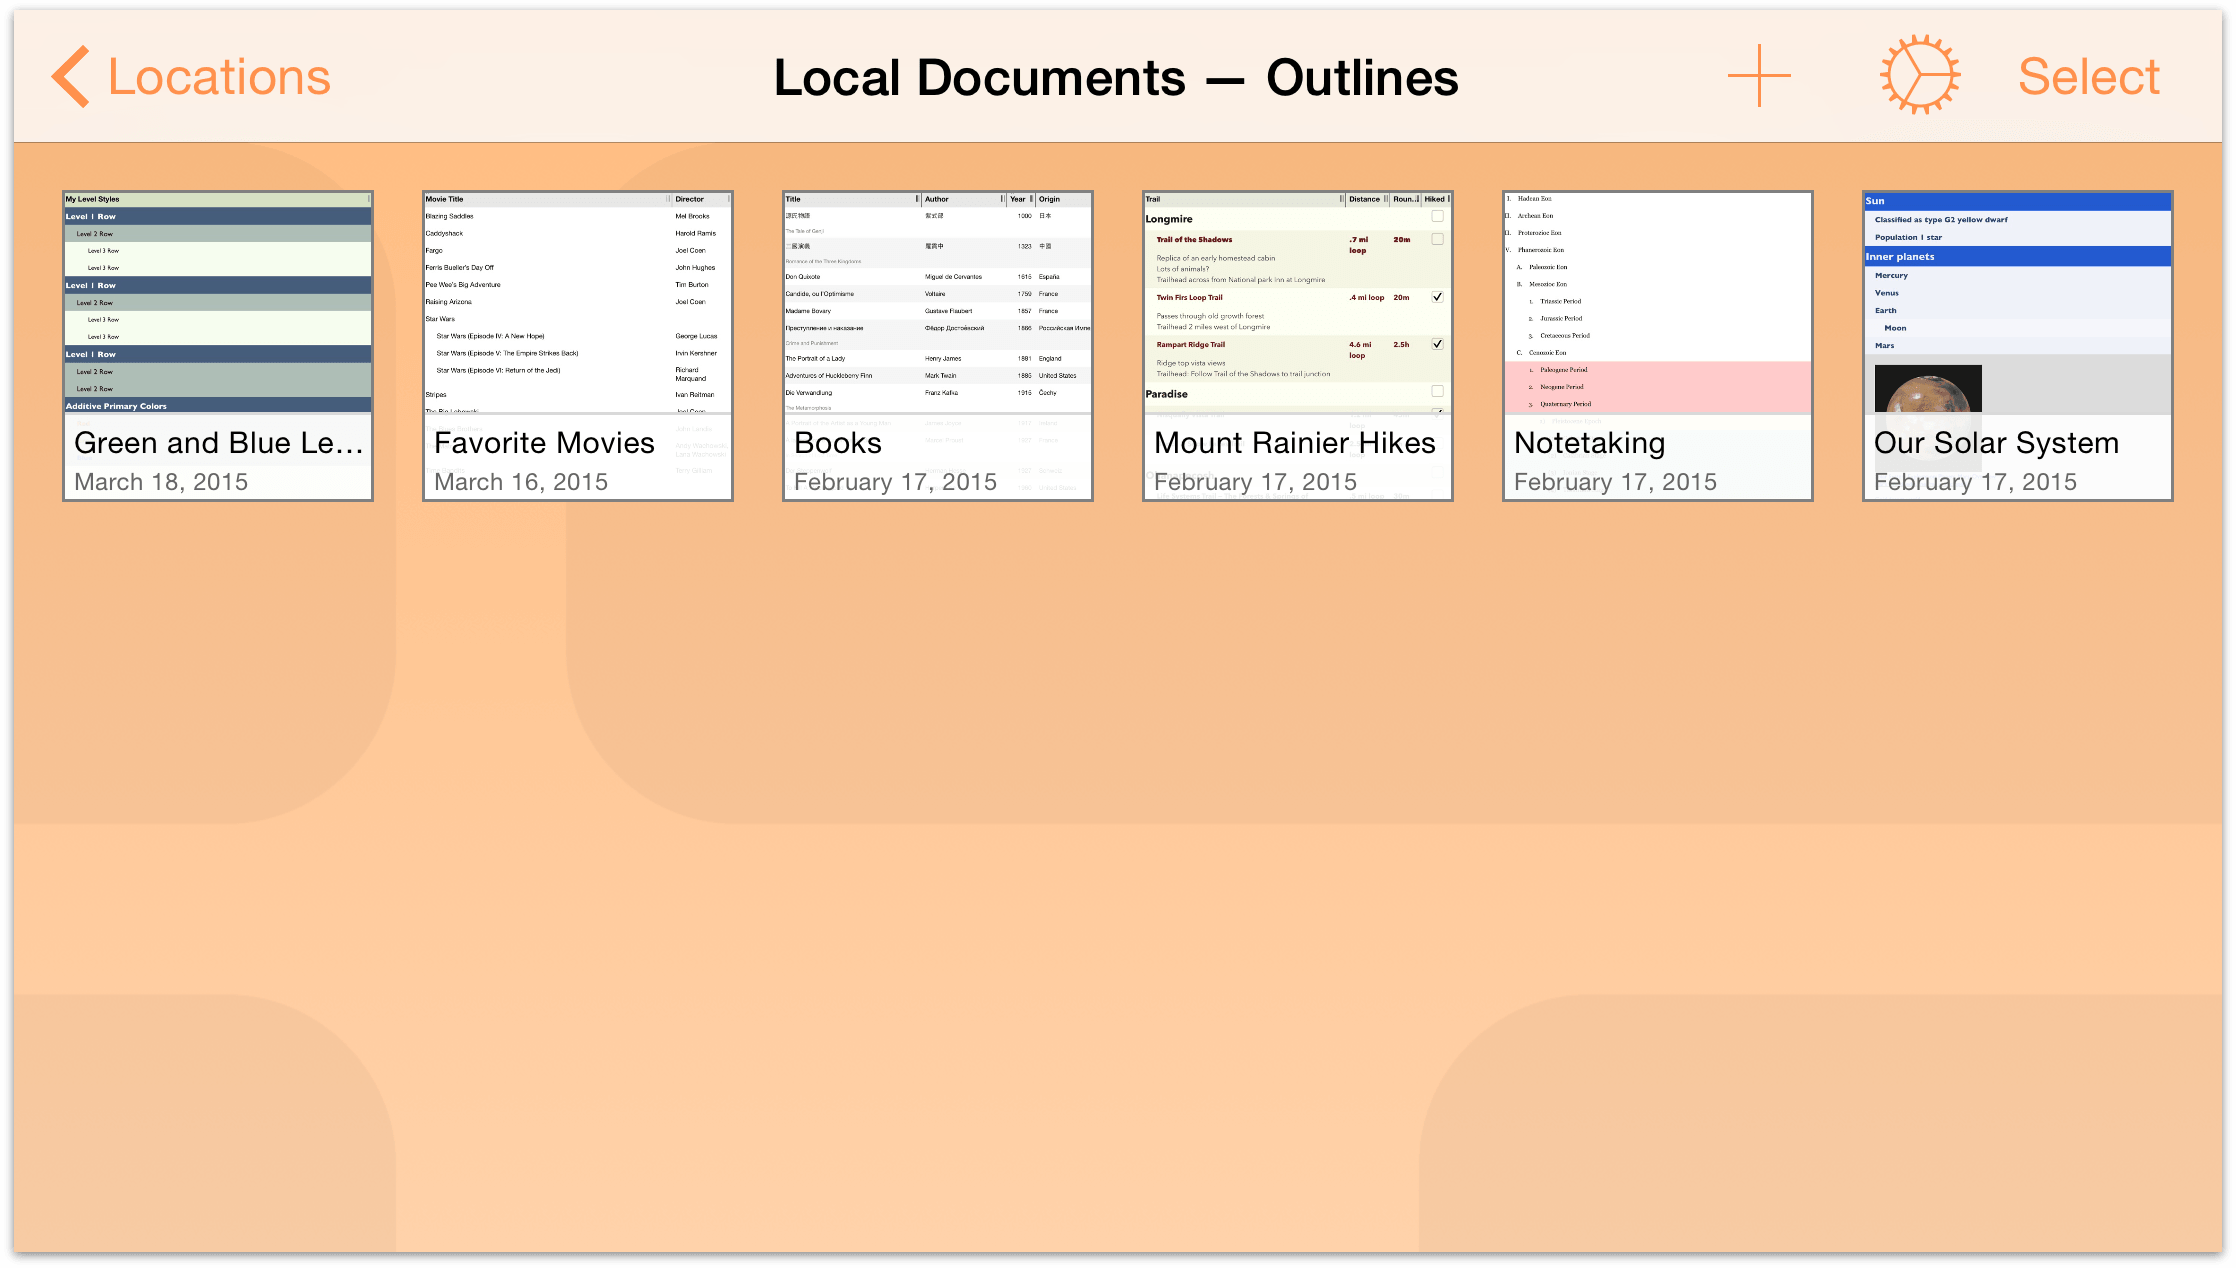 The Local Documents folder